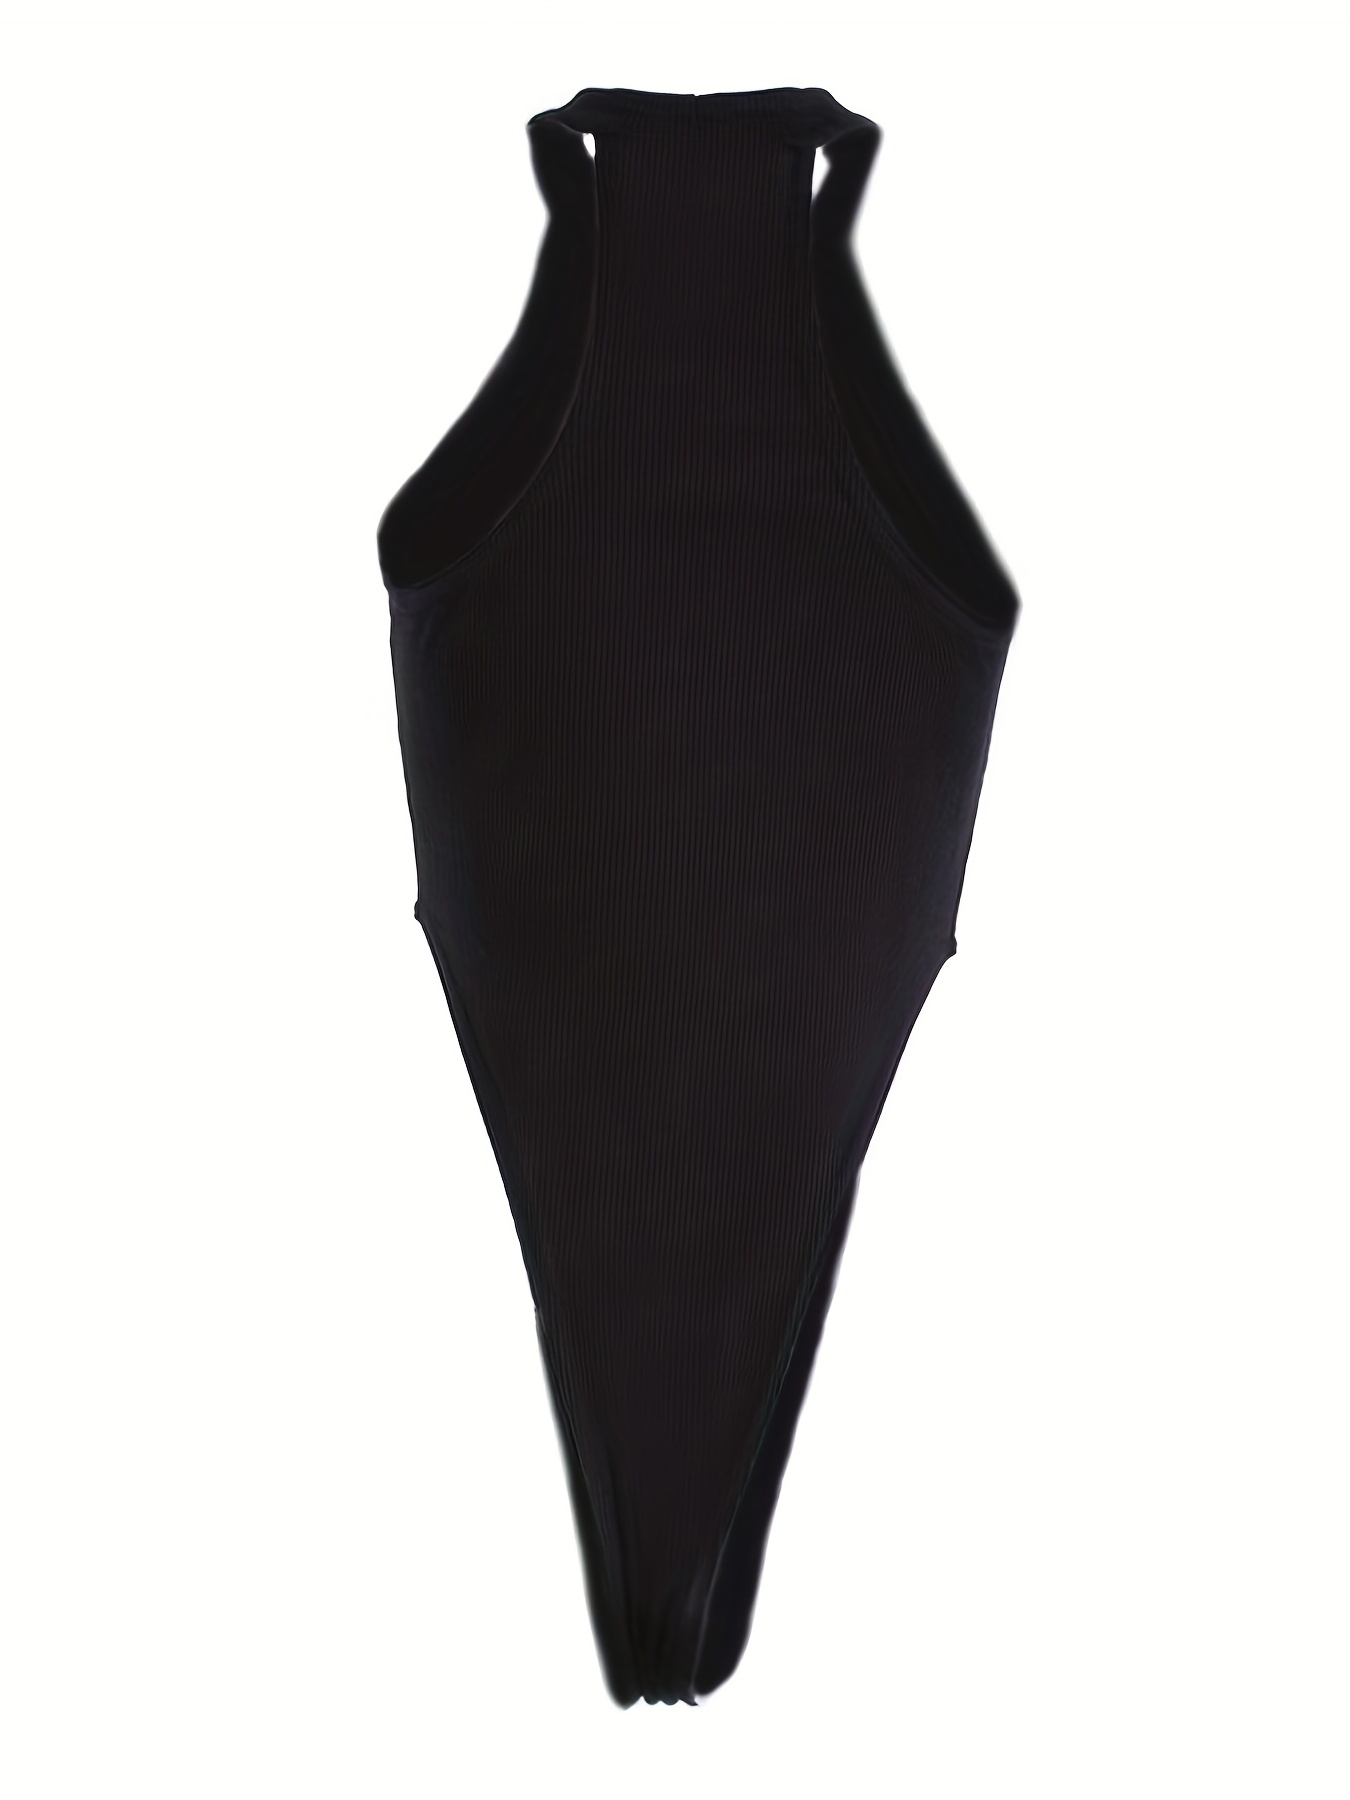 Sleeveless Ribbed V Neck Bodysuit Set for Women - 3 Piece Sexy